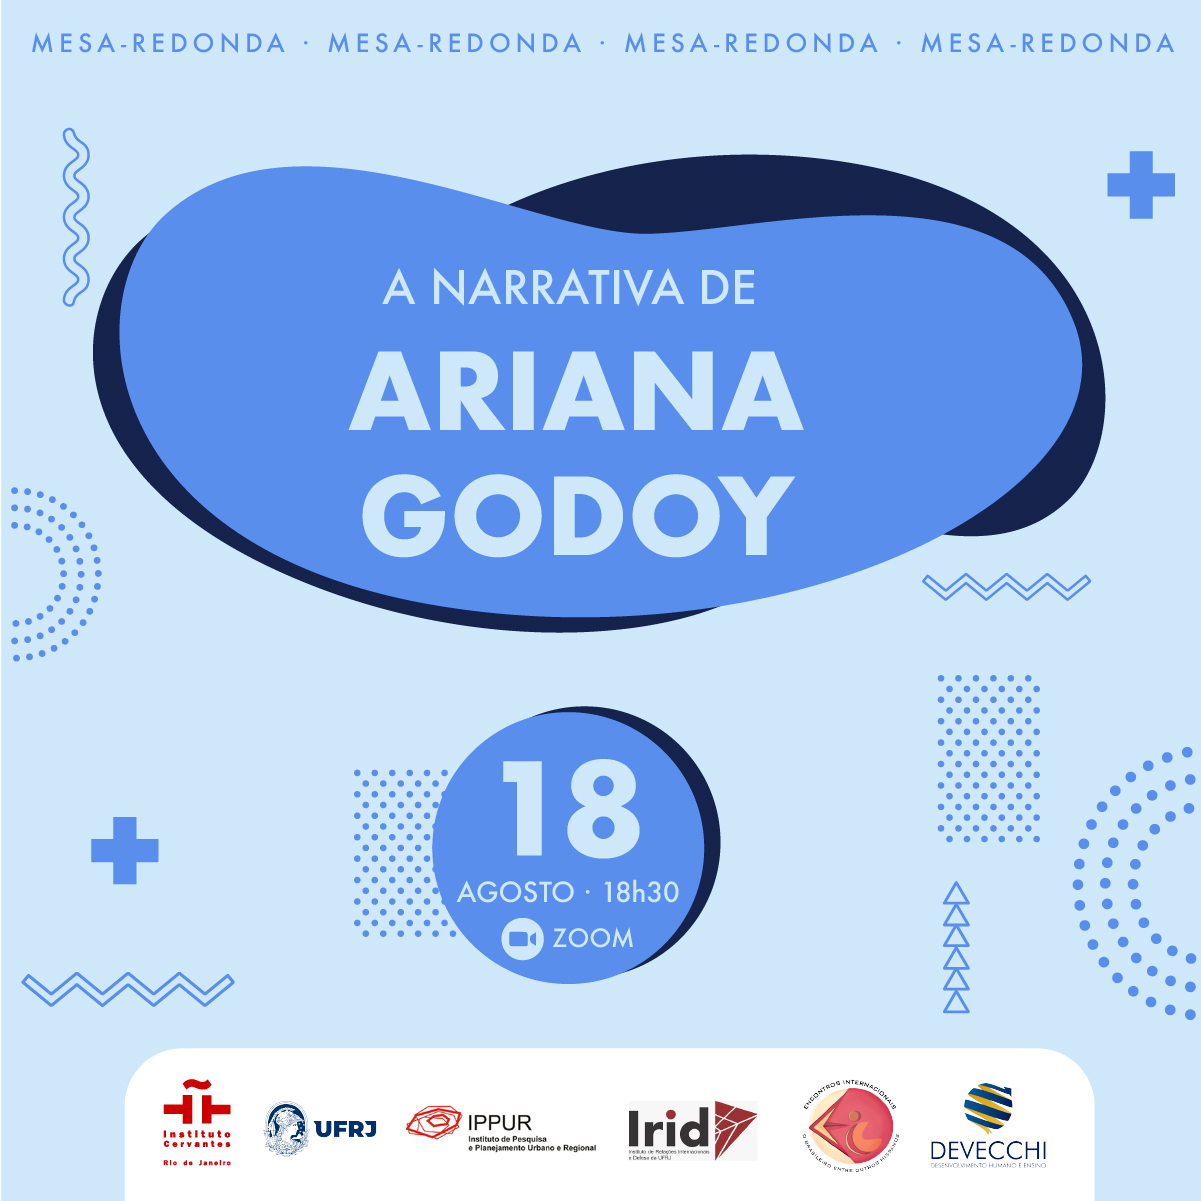 A narrativa de Ariana Godoy